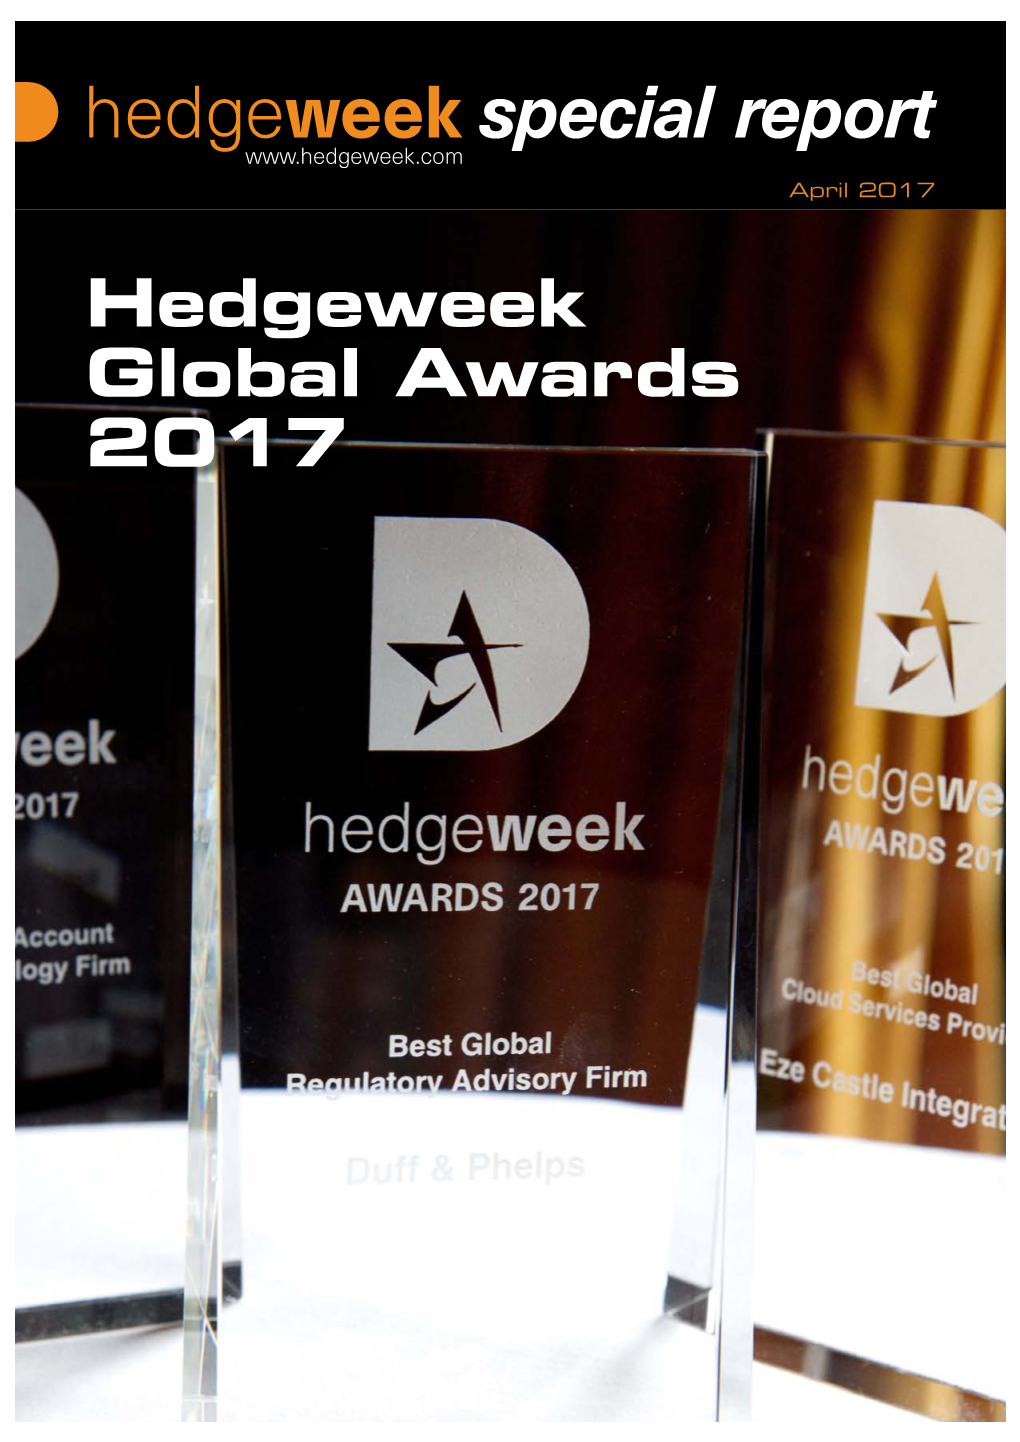 Hedgeweek Global Awards 2017 CONTENTS